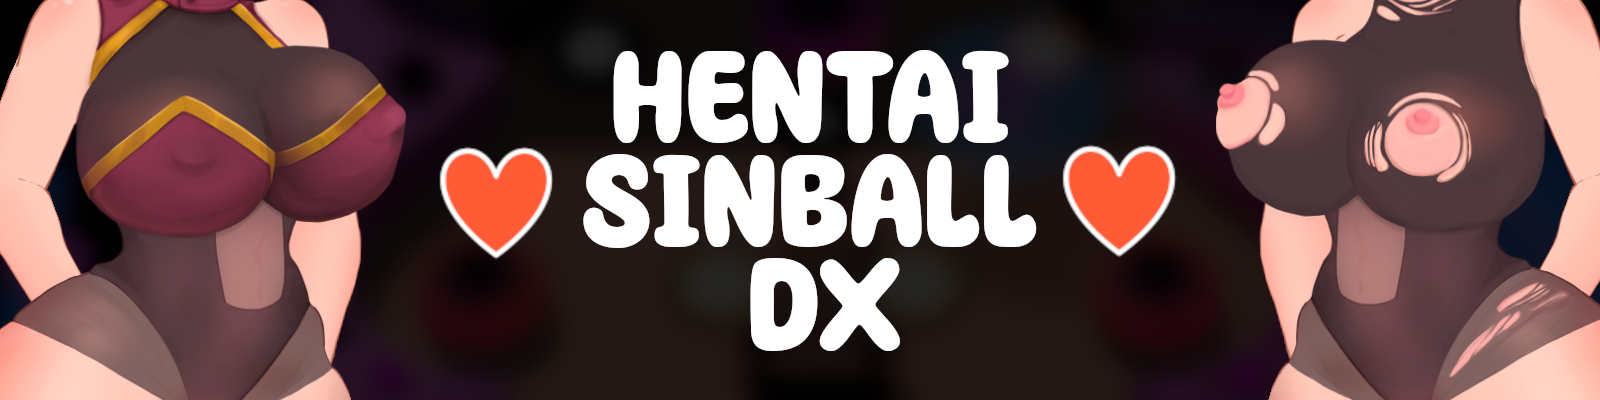 Hentai Sinball DX